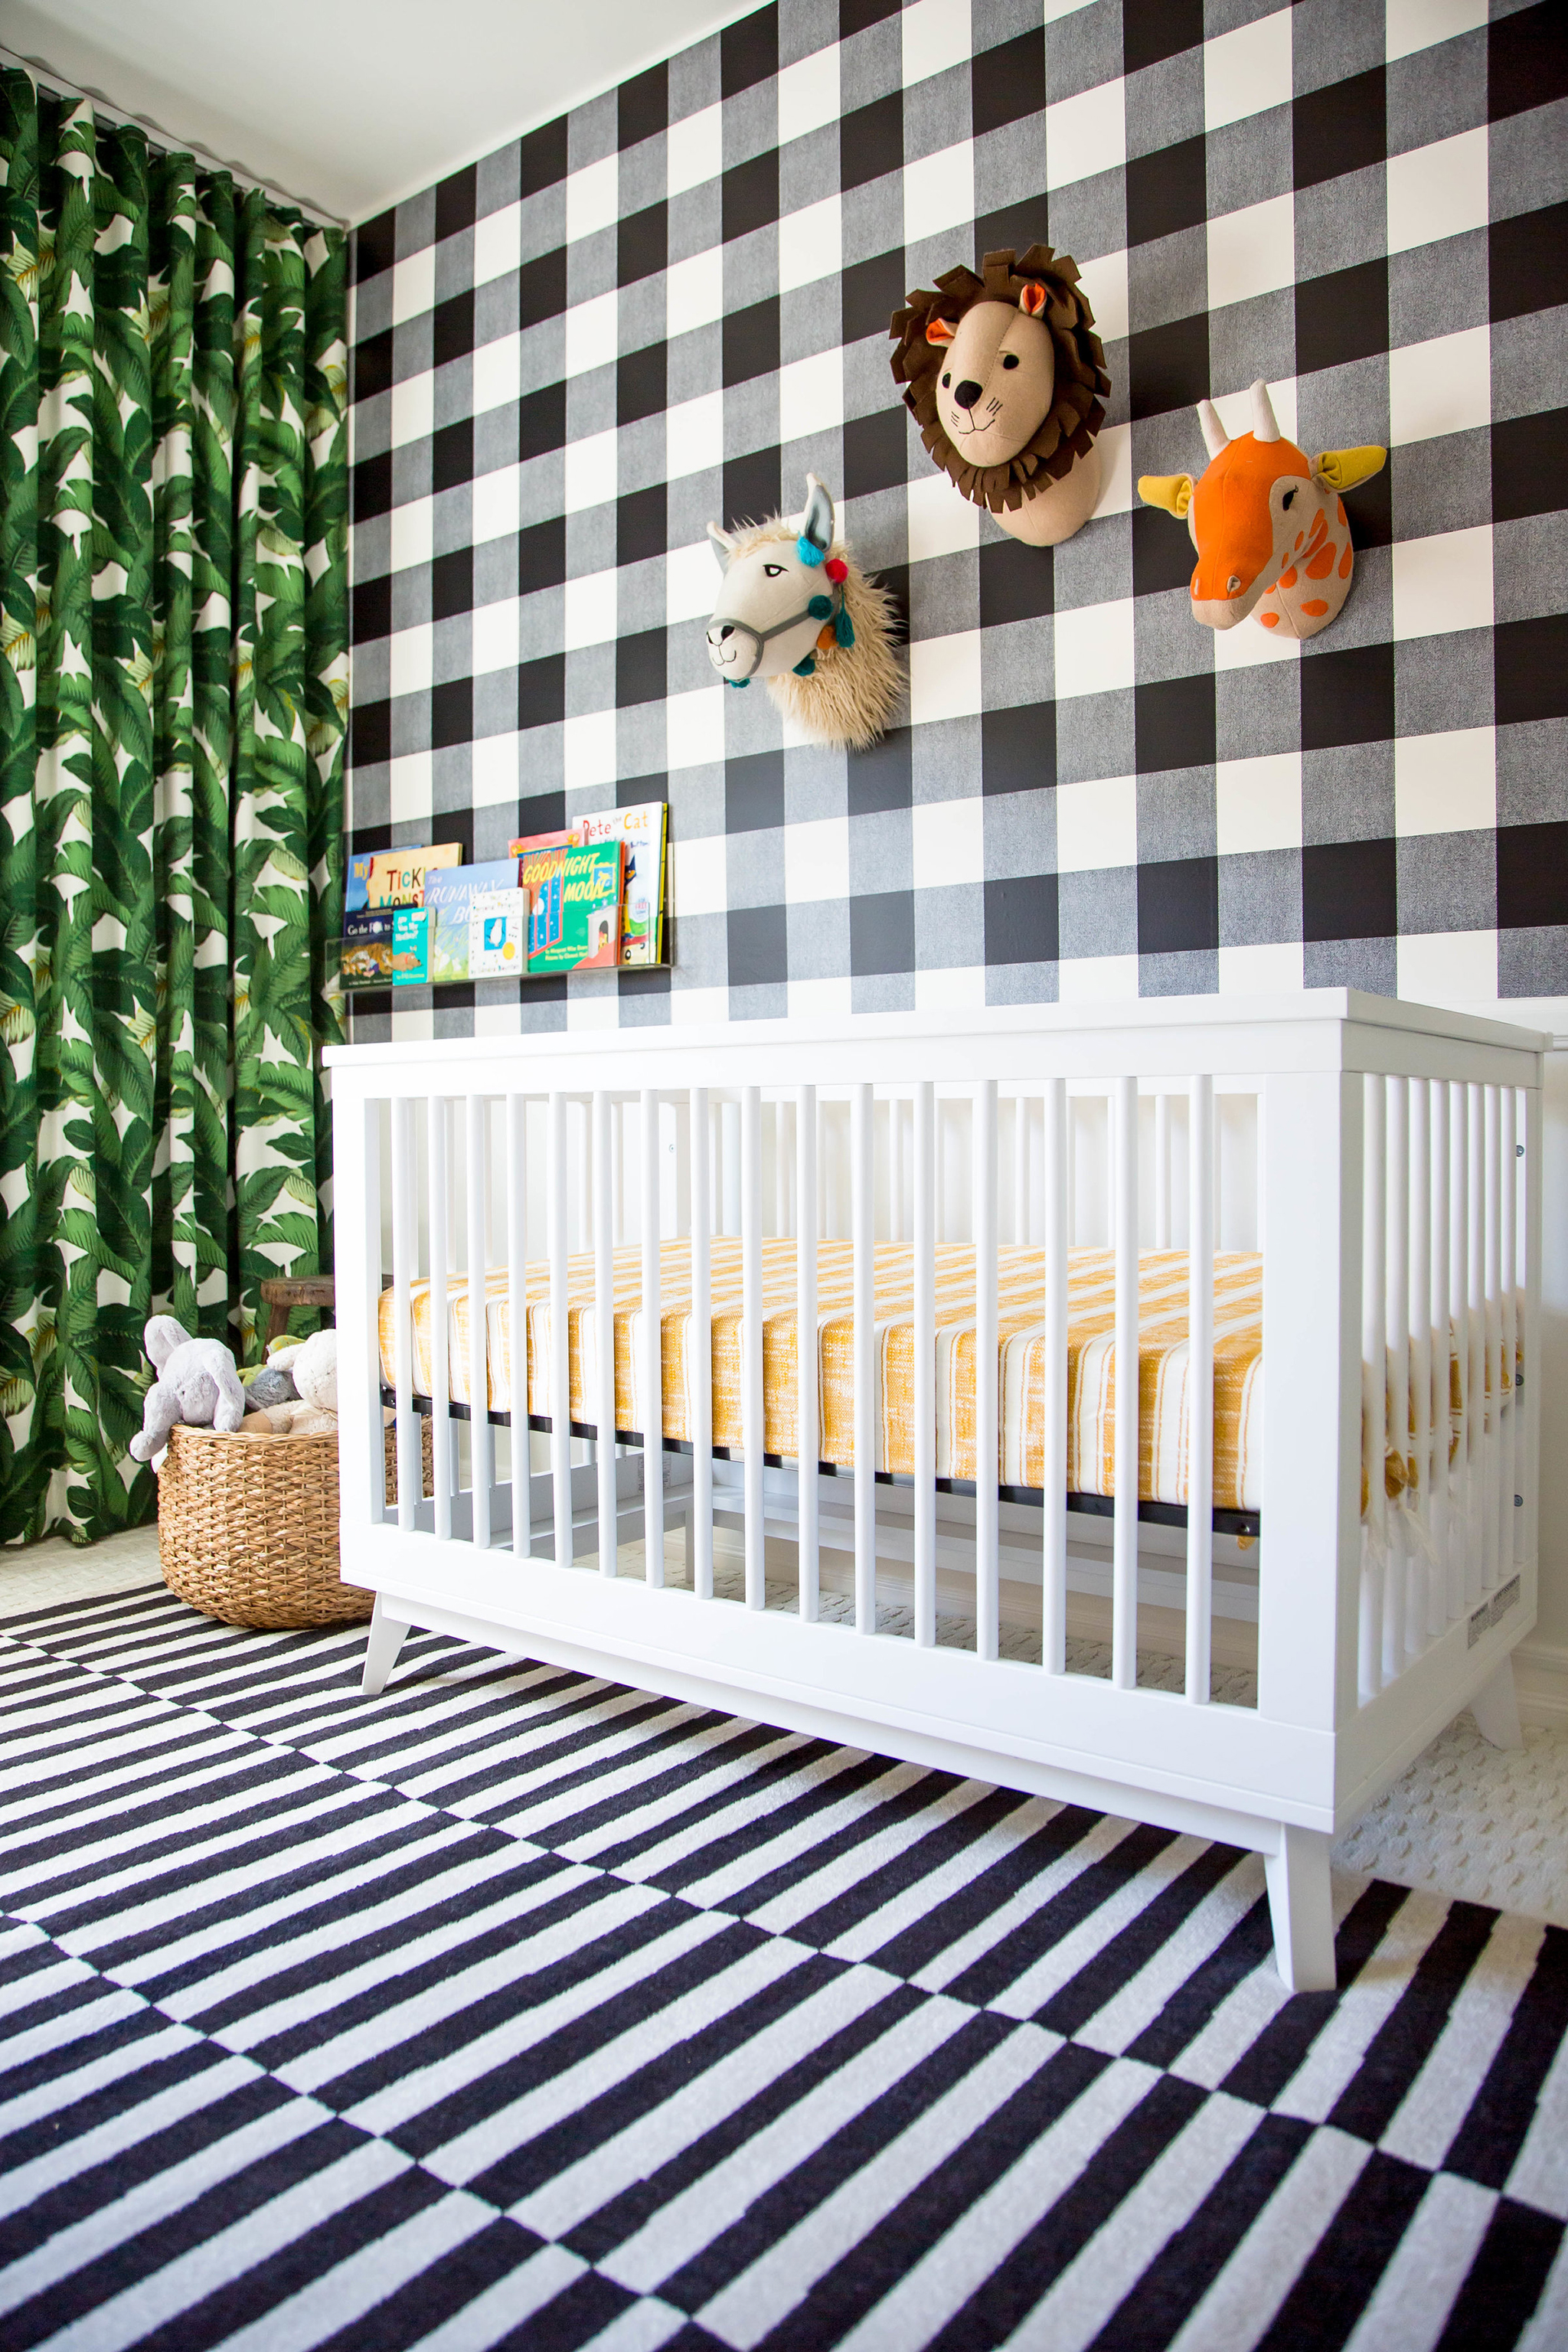 Willa Ford Nursery Design - Checked Wallpaper